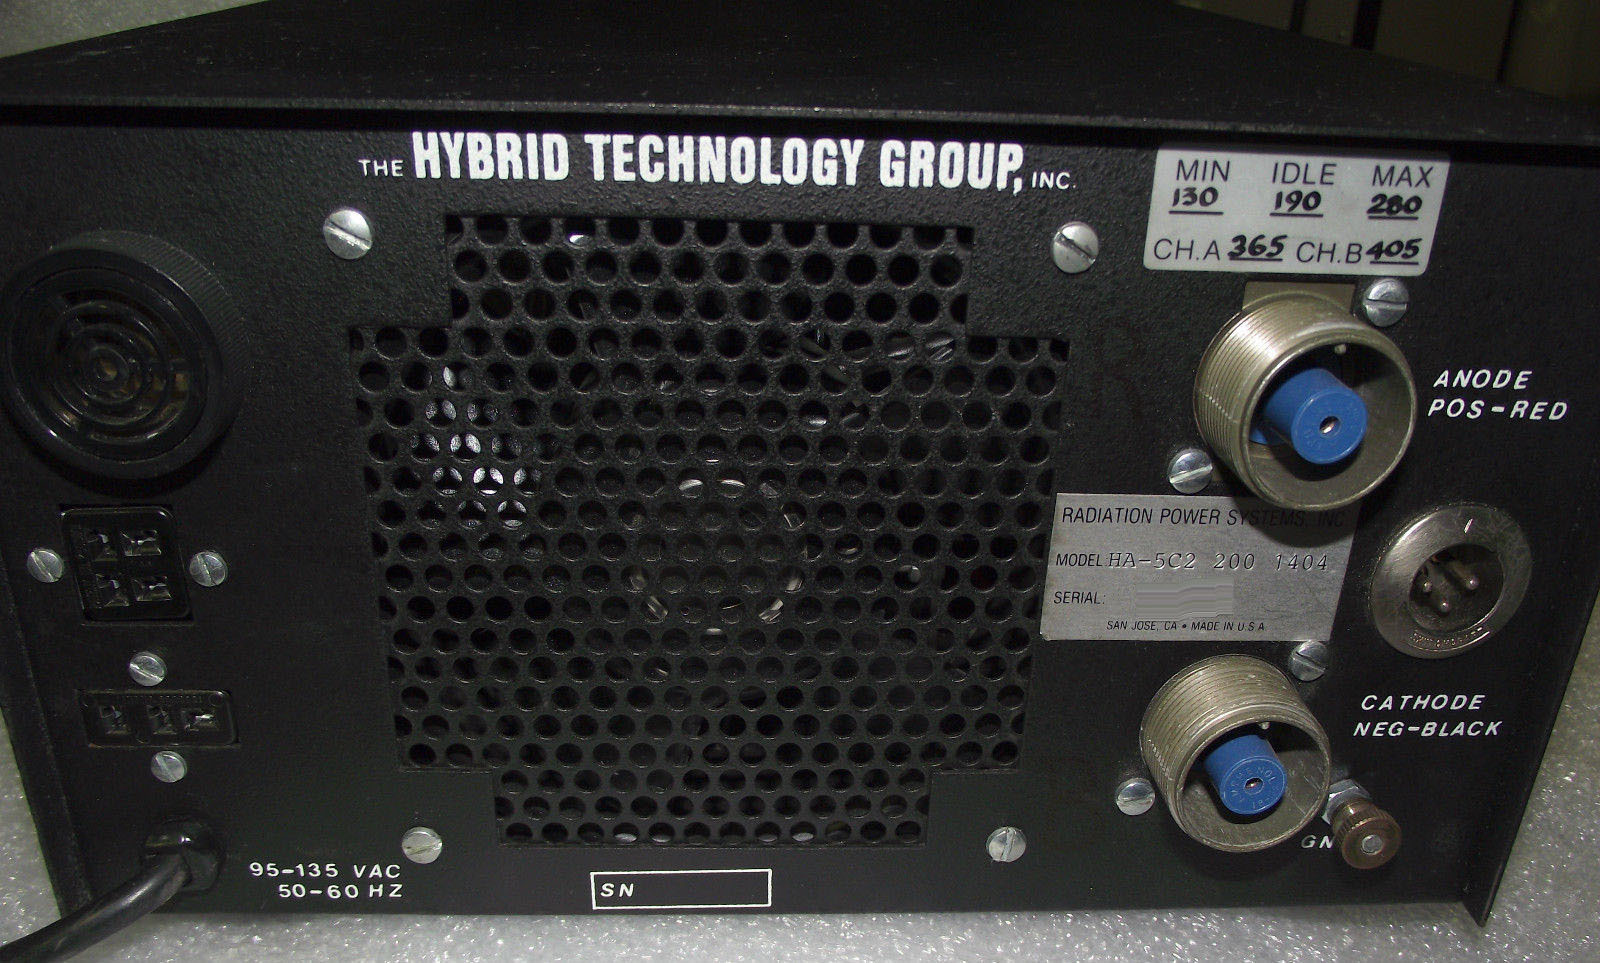 圖為 已使用的 RADIATION POWER SYSTEMS HA-5C2 200 1404 待售